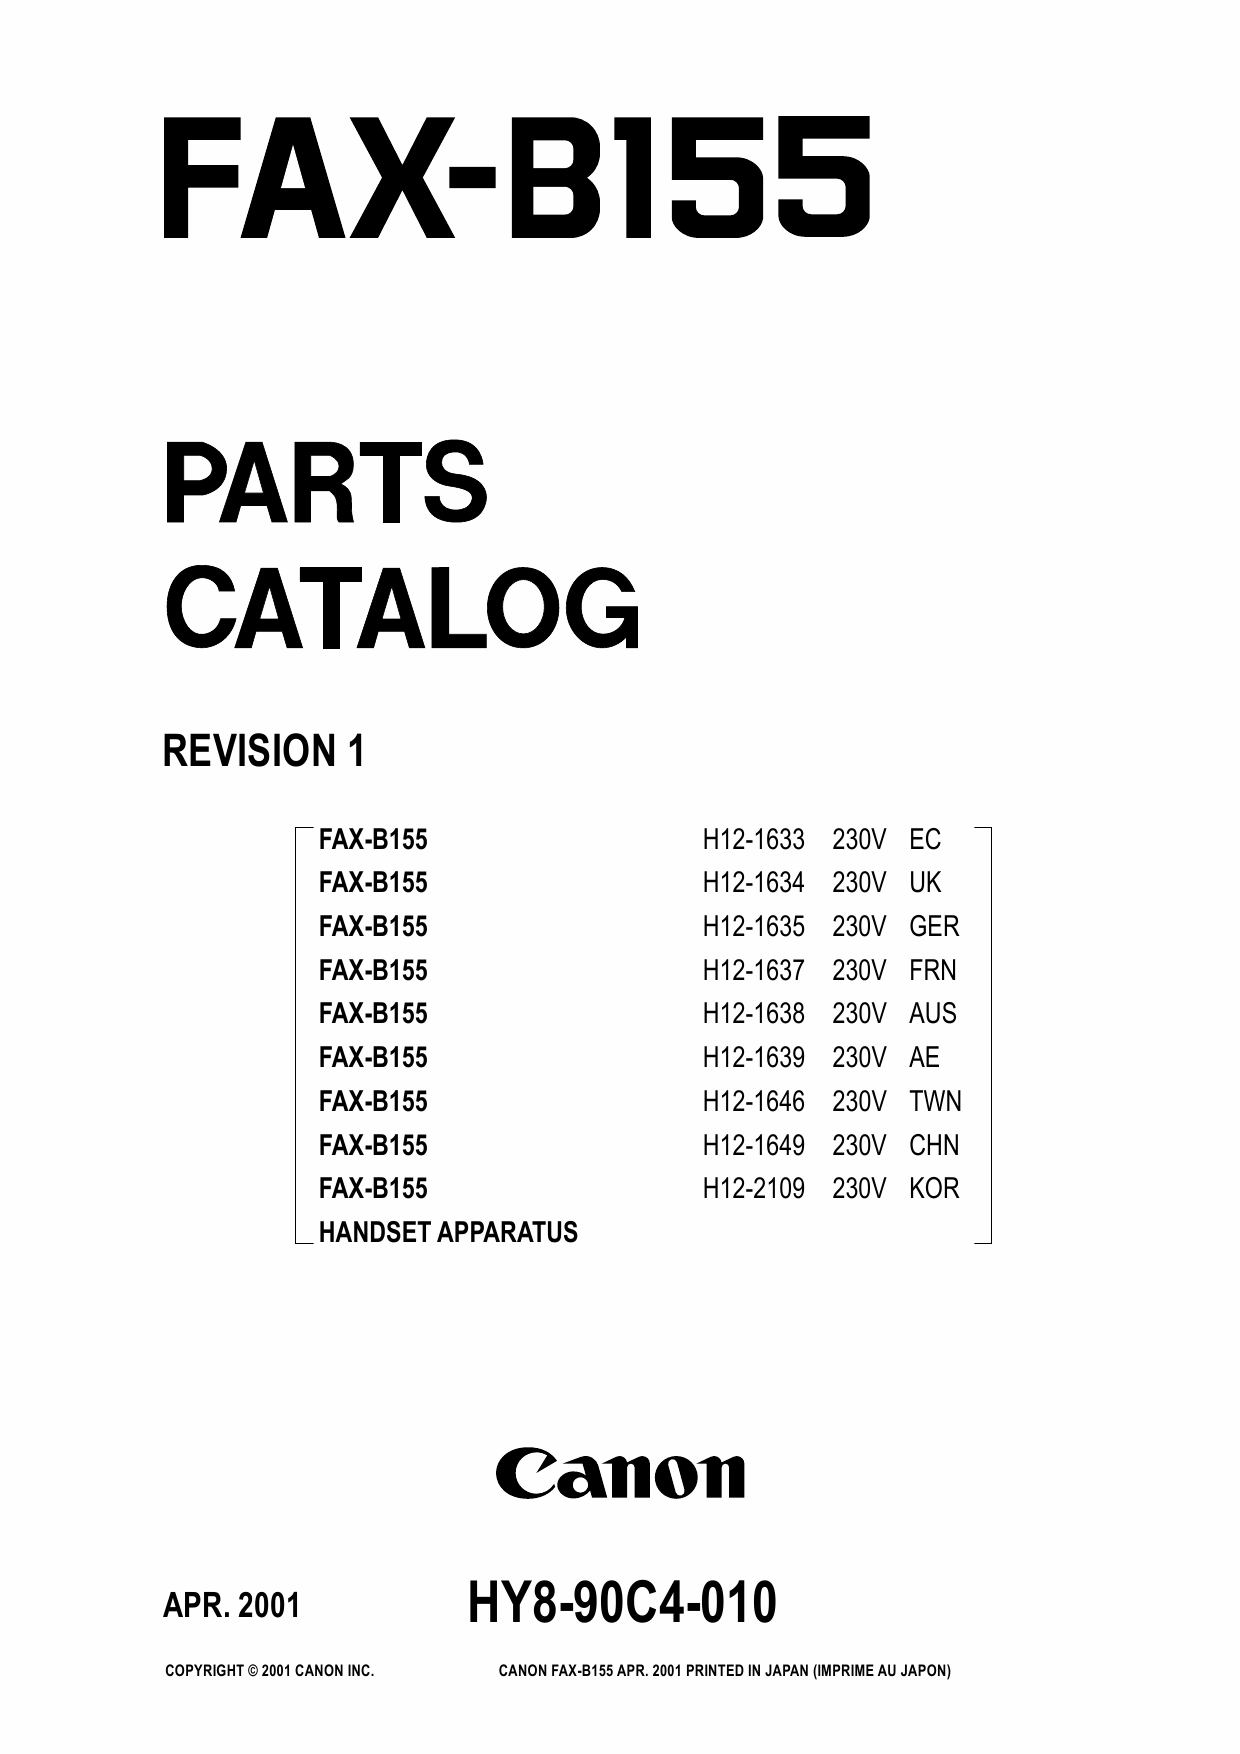 Canon FAX B155 Parts Catalog Manual-1